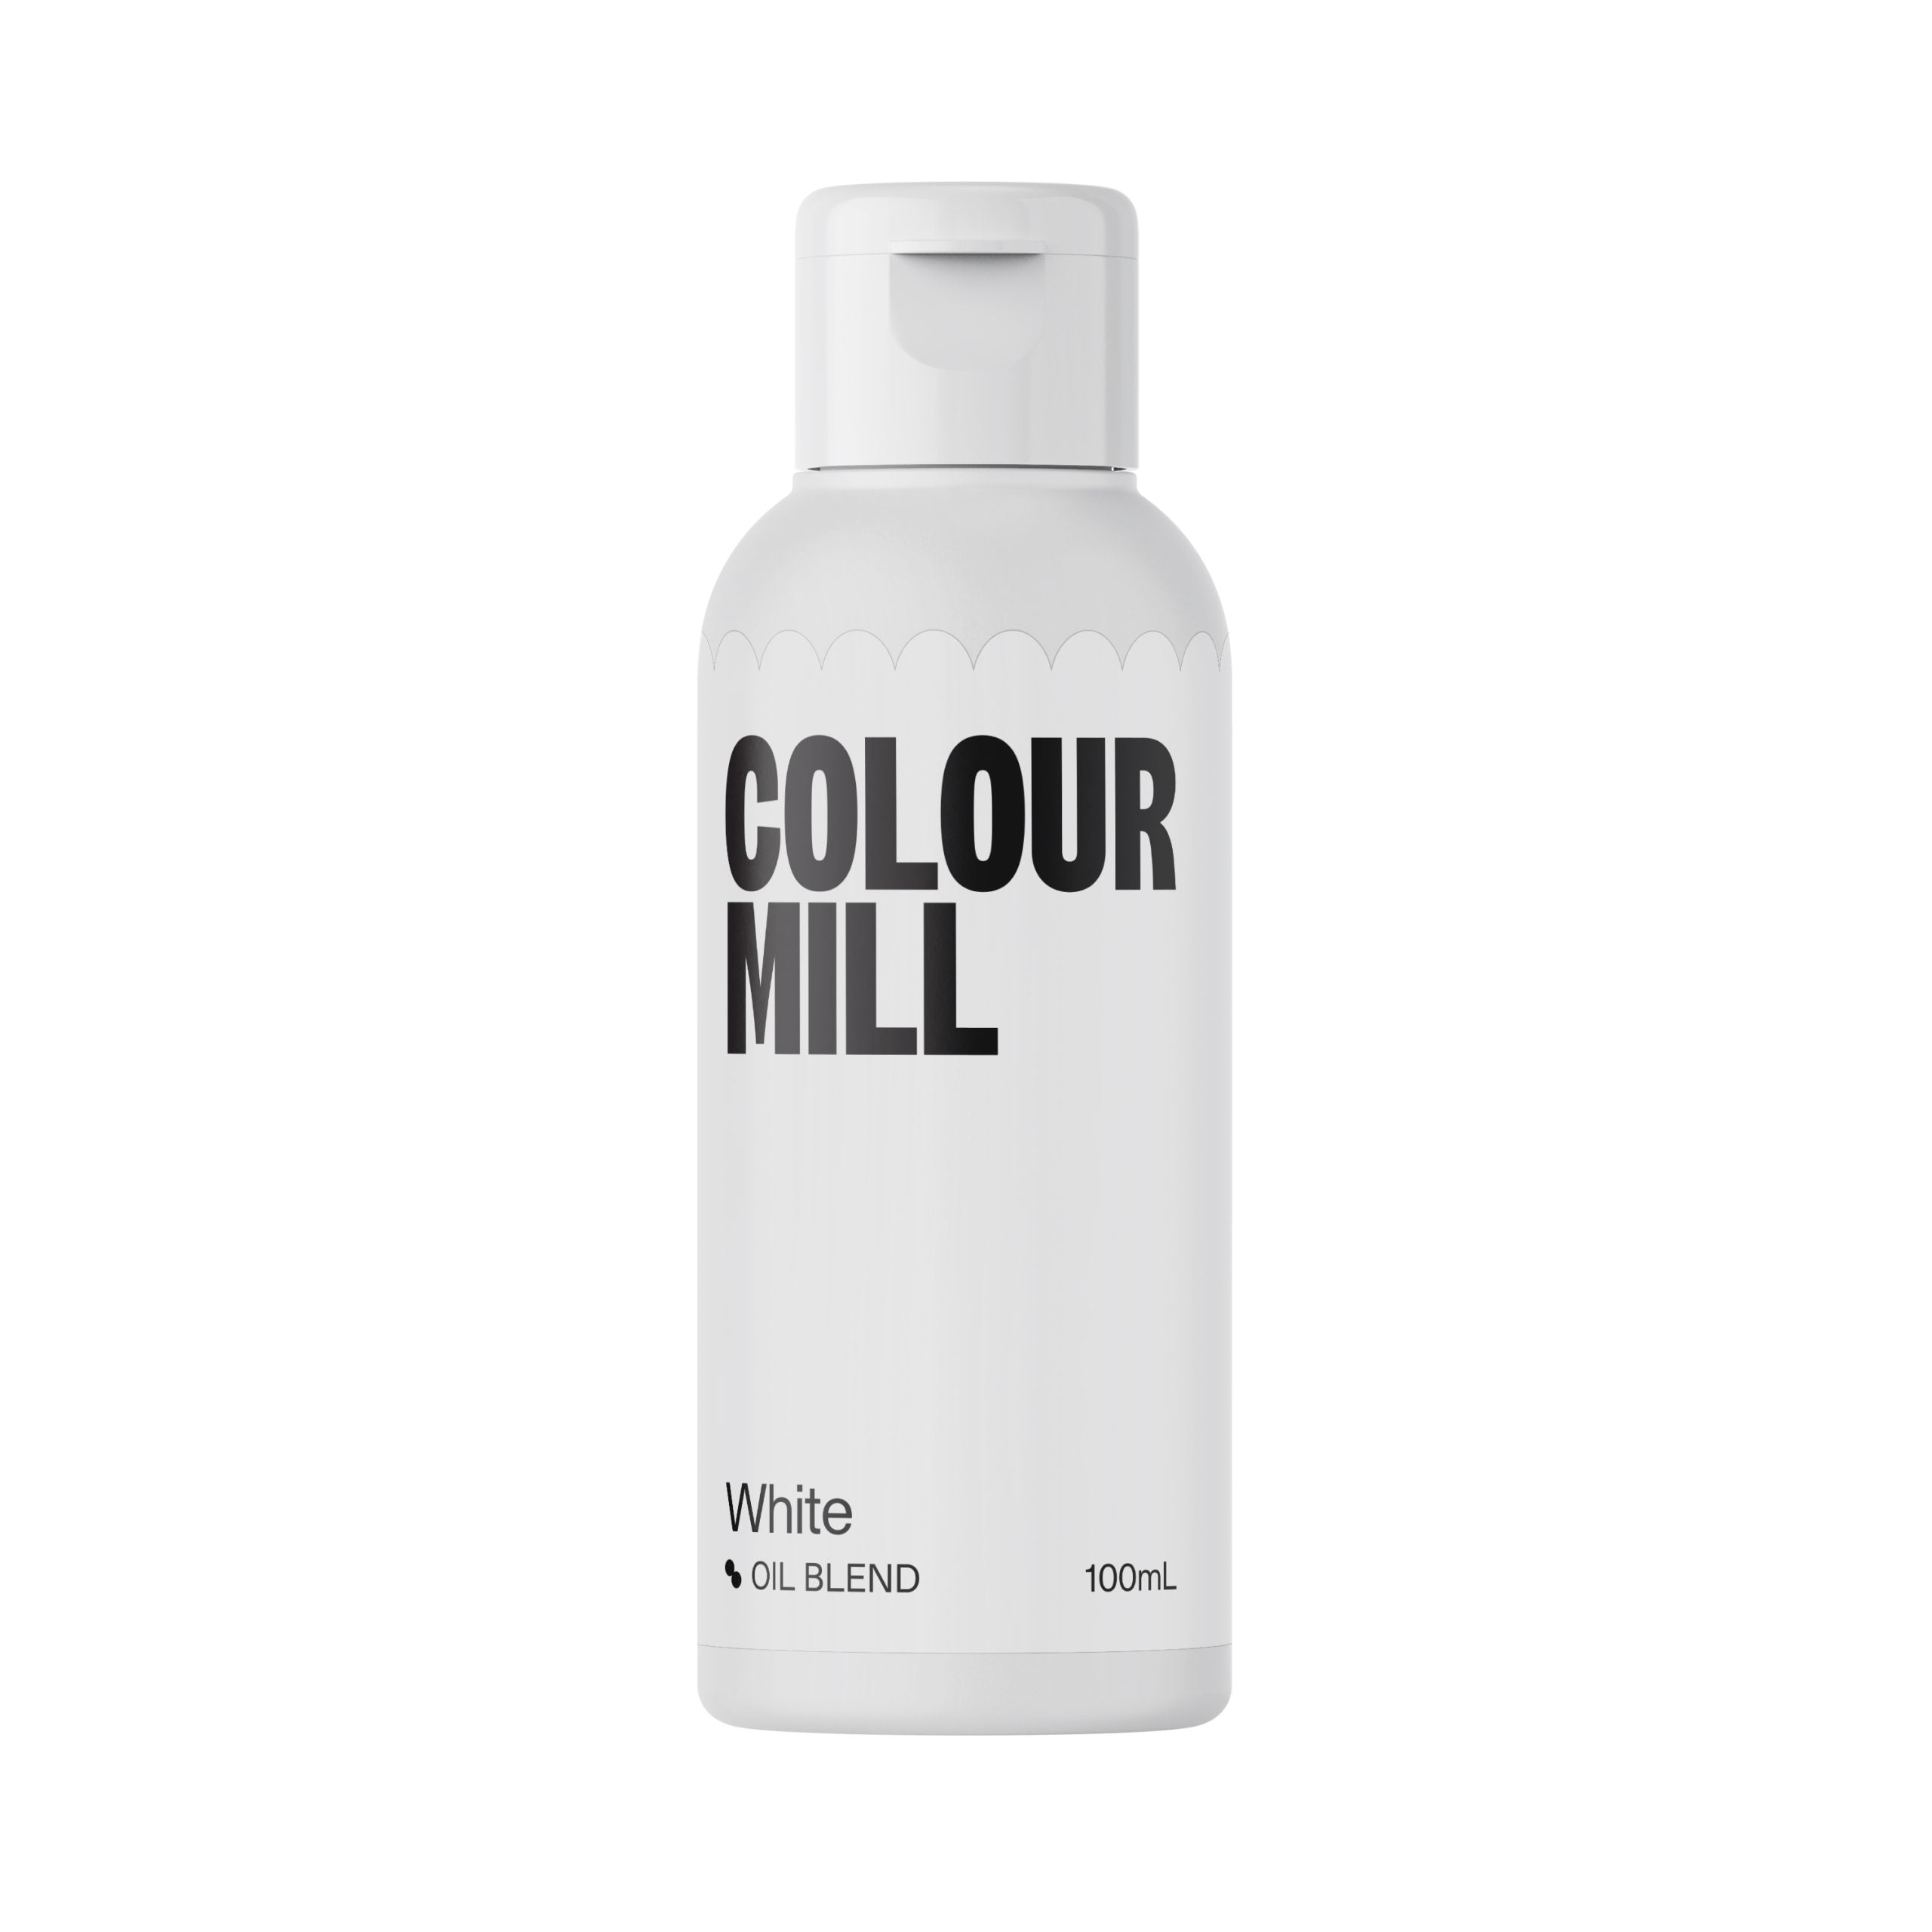 Colour Mill Oil Based Colouring 100ml - White